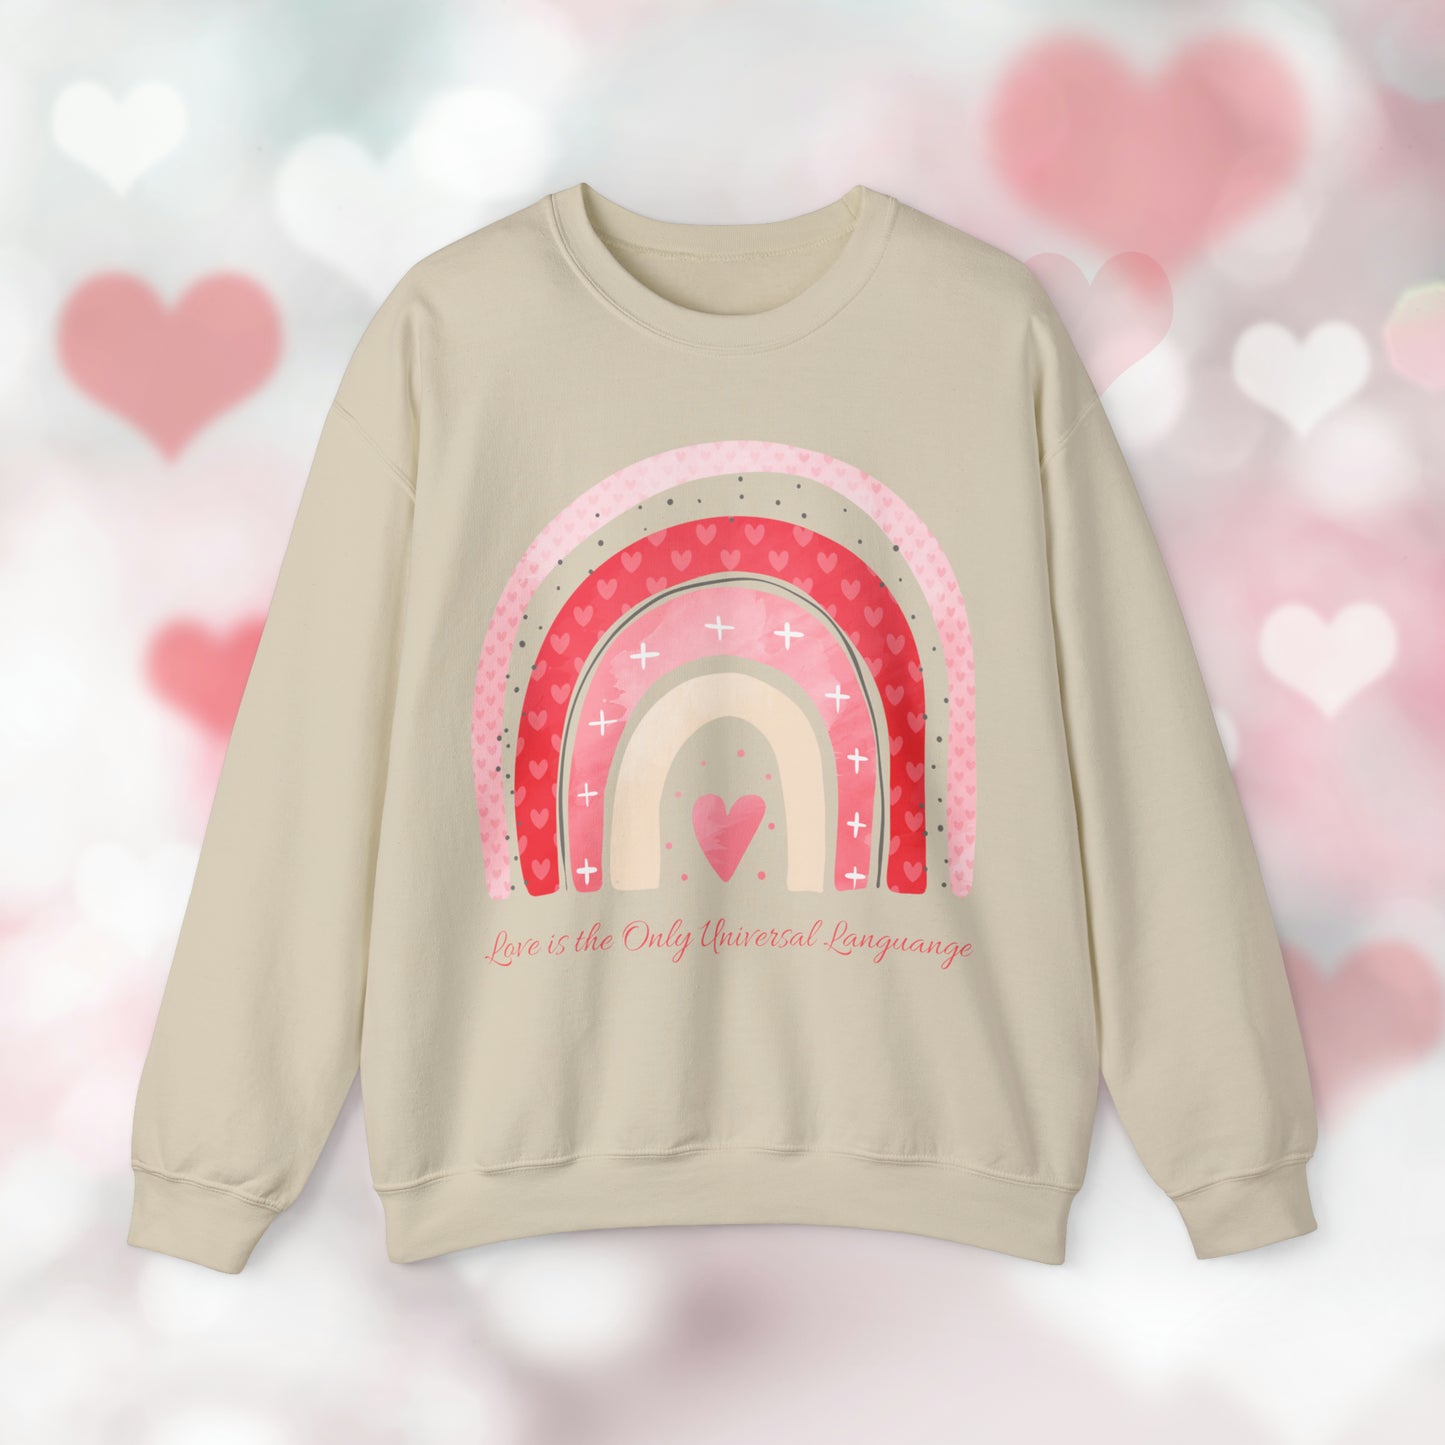 Love is the Only Universal Language: Crewneck Sweatshirt